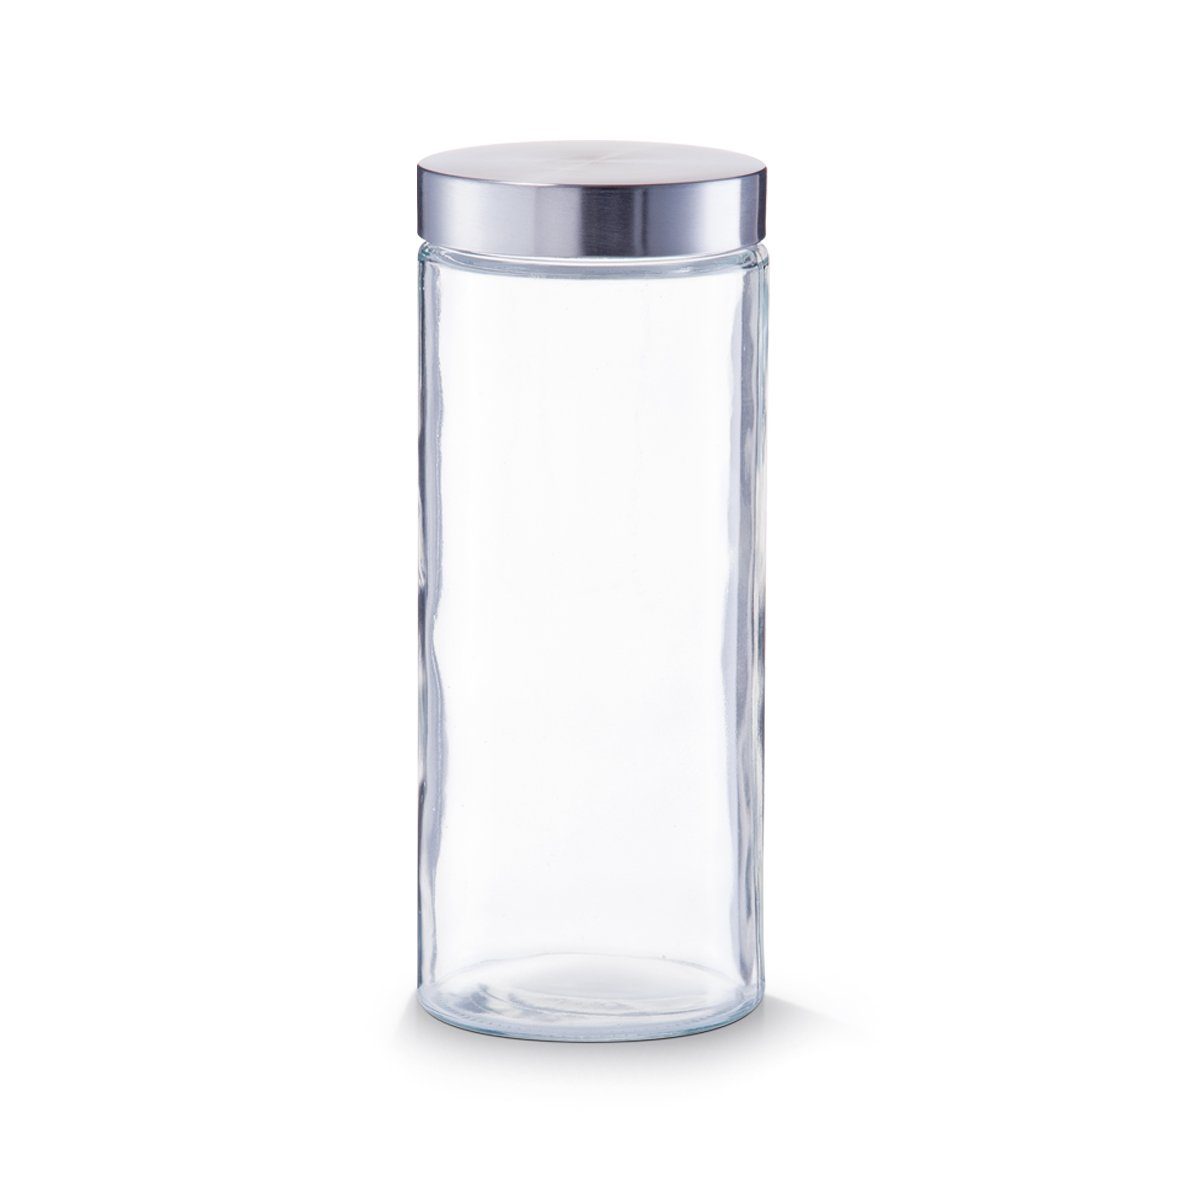 Zeller Present Vorratsglas Edelstahldeckel, Glas/Edelstahl, cm transparent, m. 27 Glas/Edelstahl, ml, Ø11 x 2100 Vorratsglas